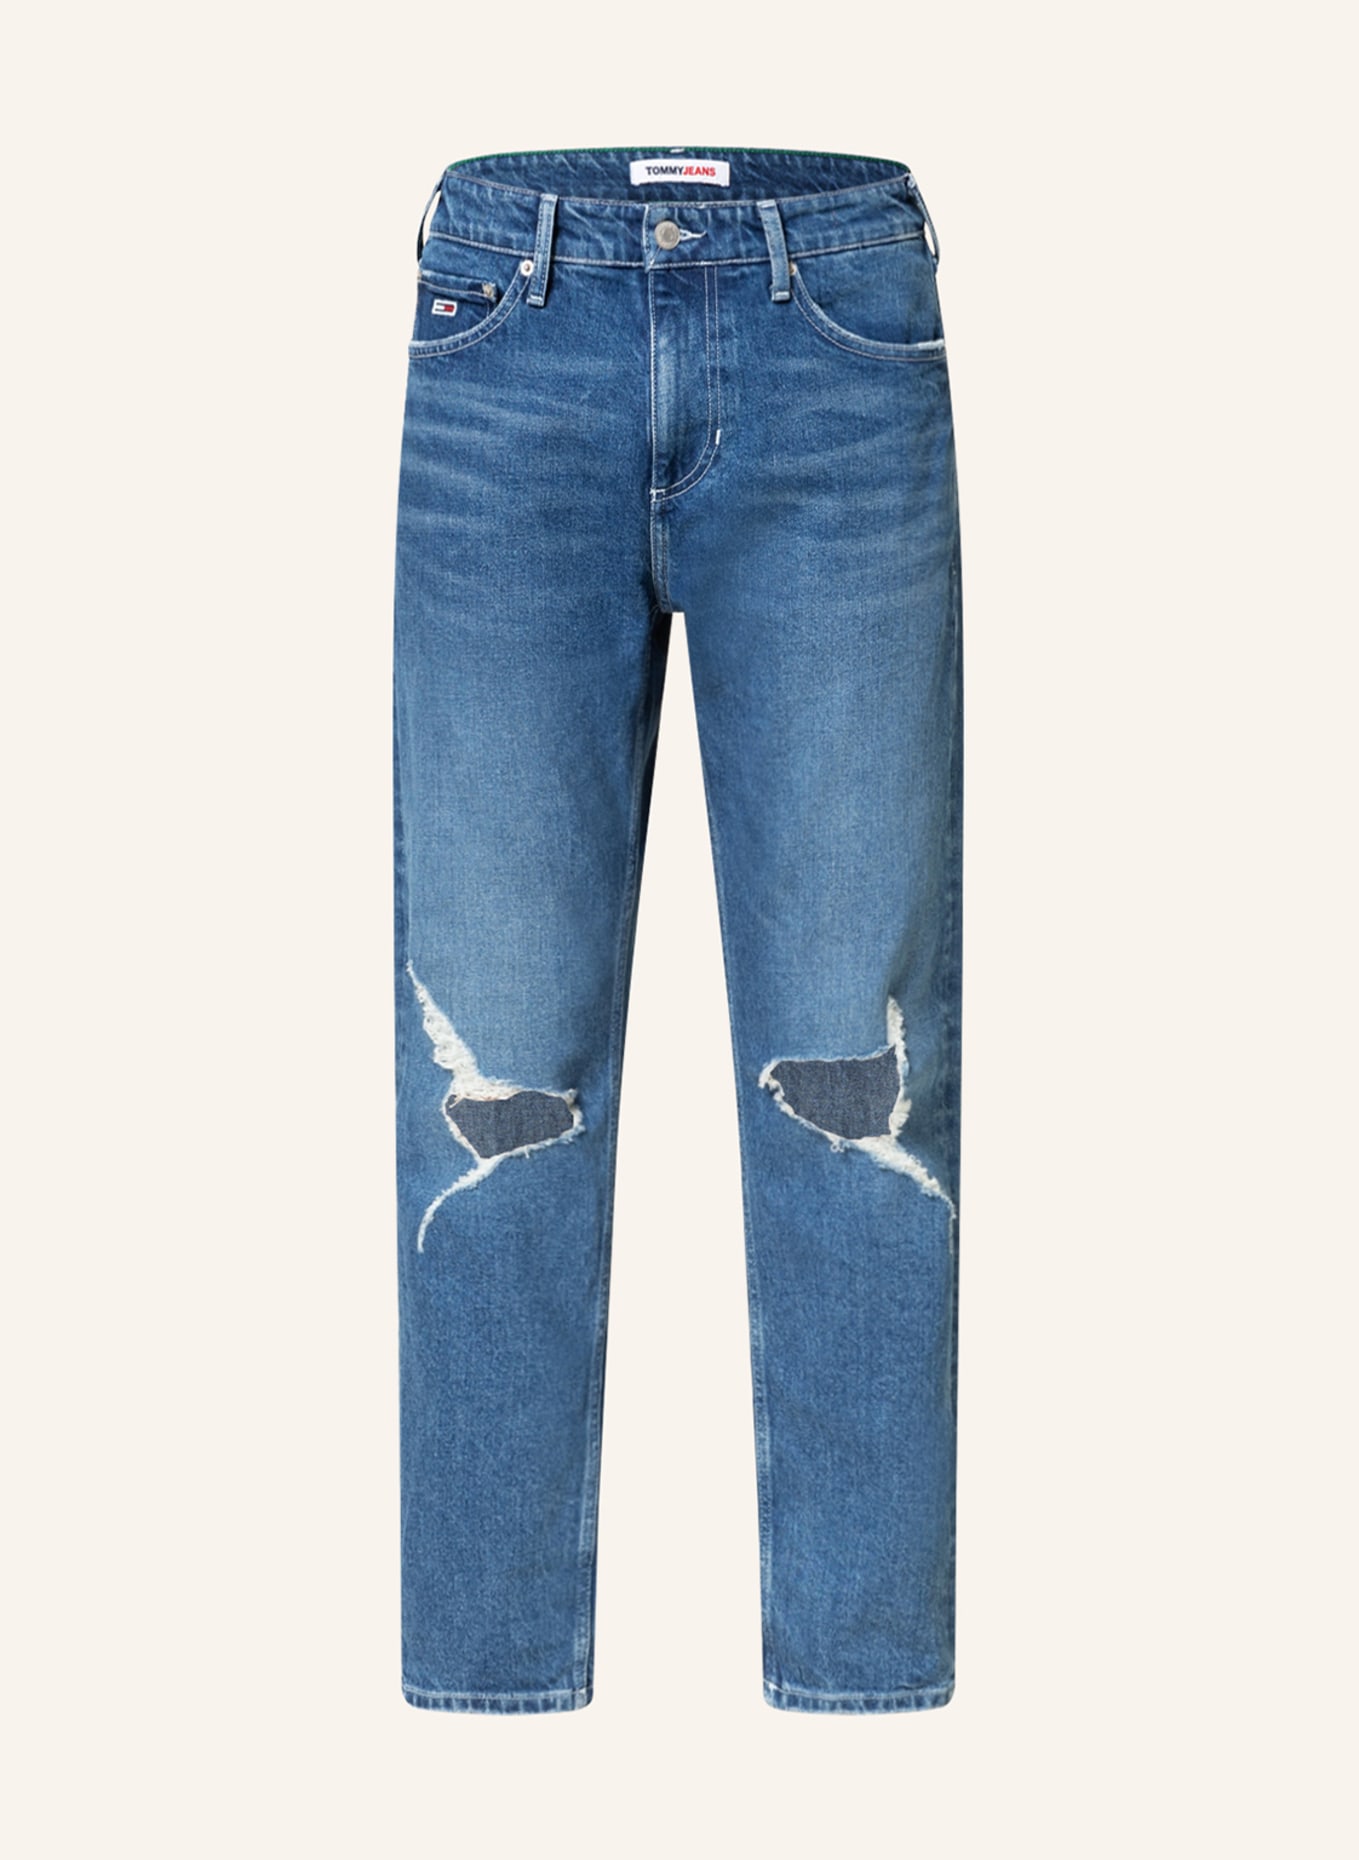 TOMMY JEANS Destroyed Jeans SCANTON Slim Fit , Farbe: 1AB Denim Medium(Bild null)